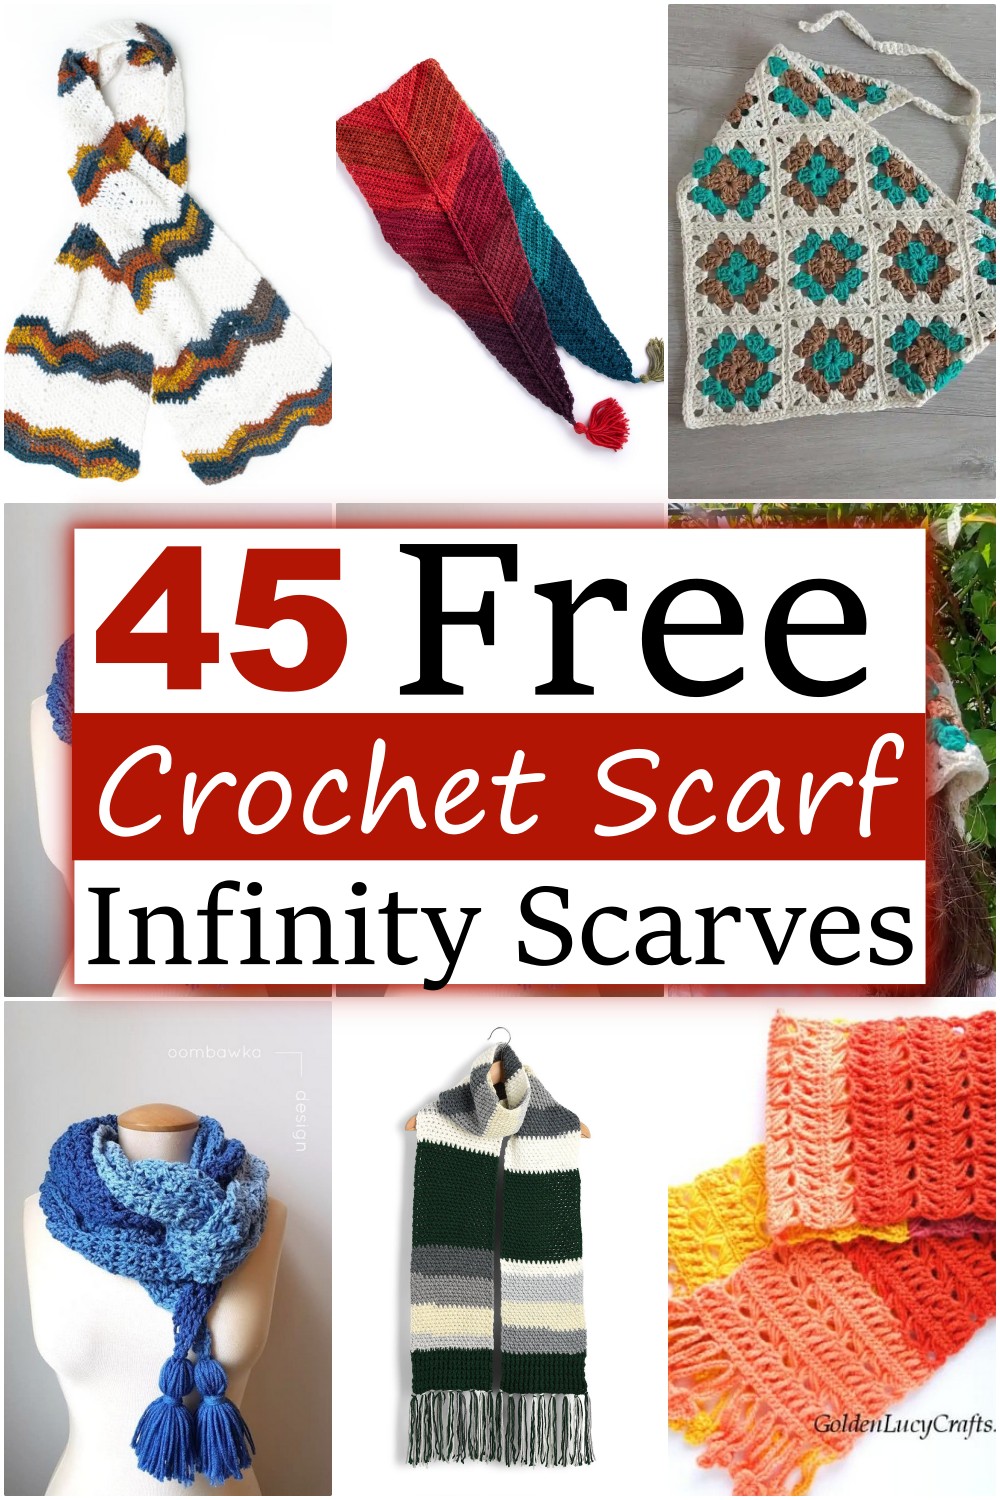 Free Crochet Scarf Patterns - Infinity Scarf Patterns